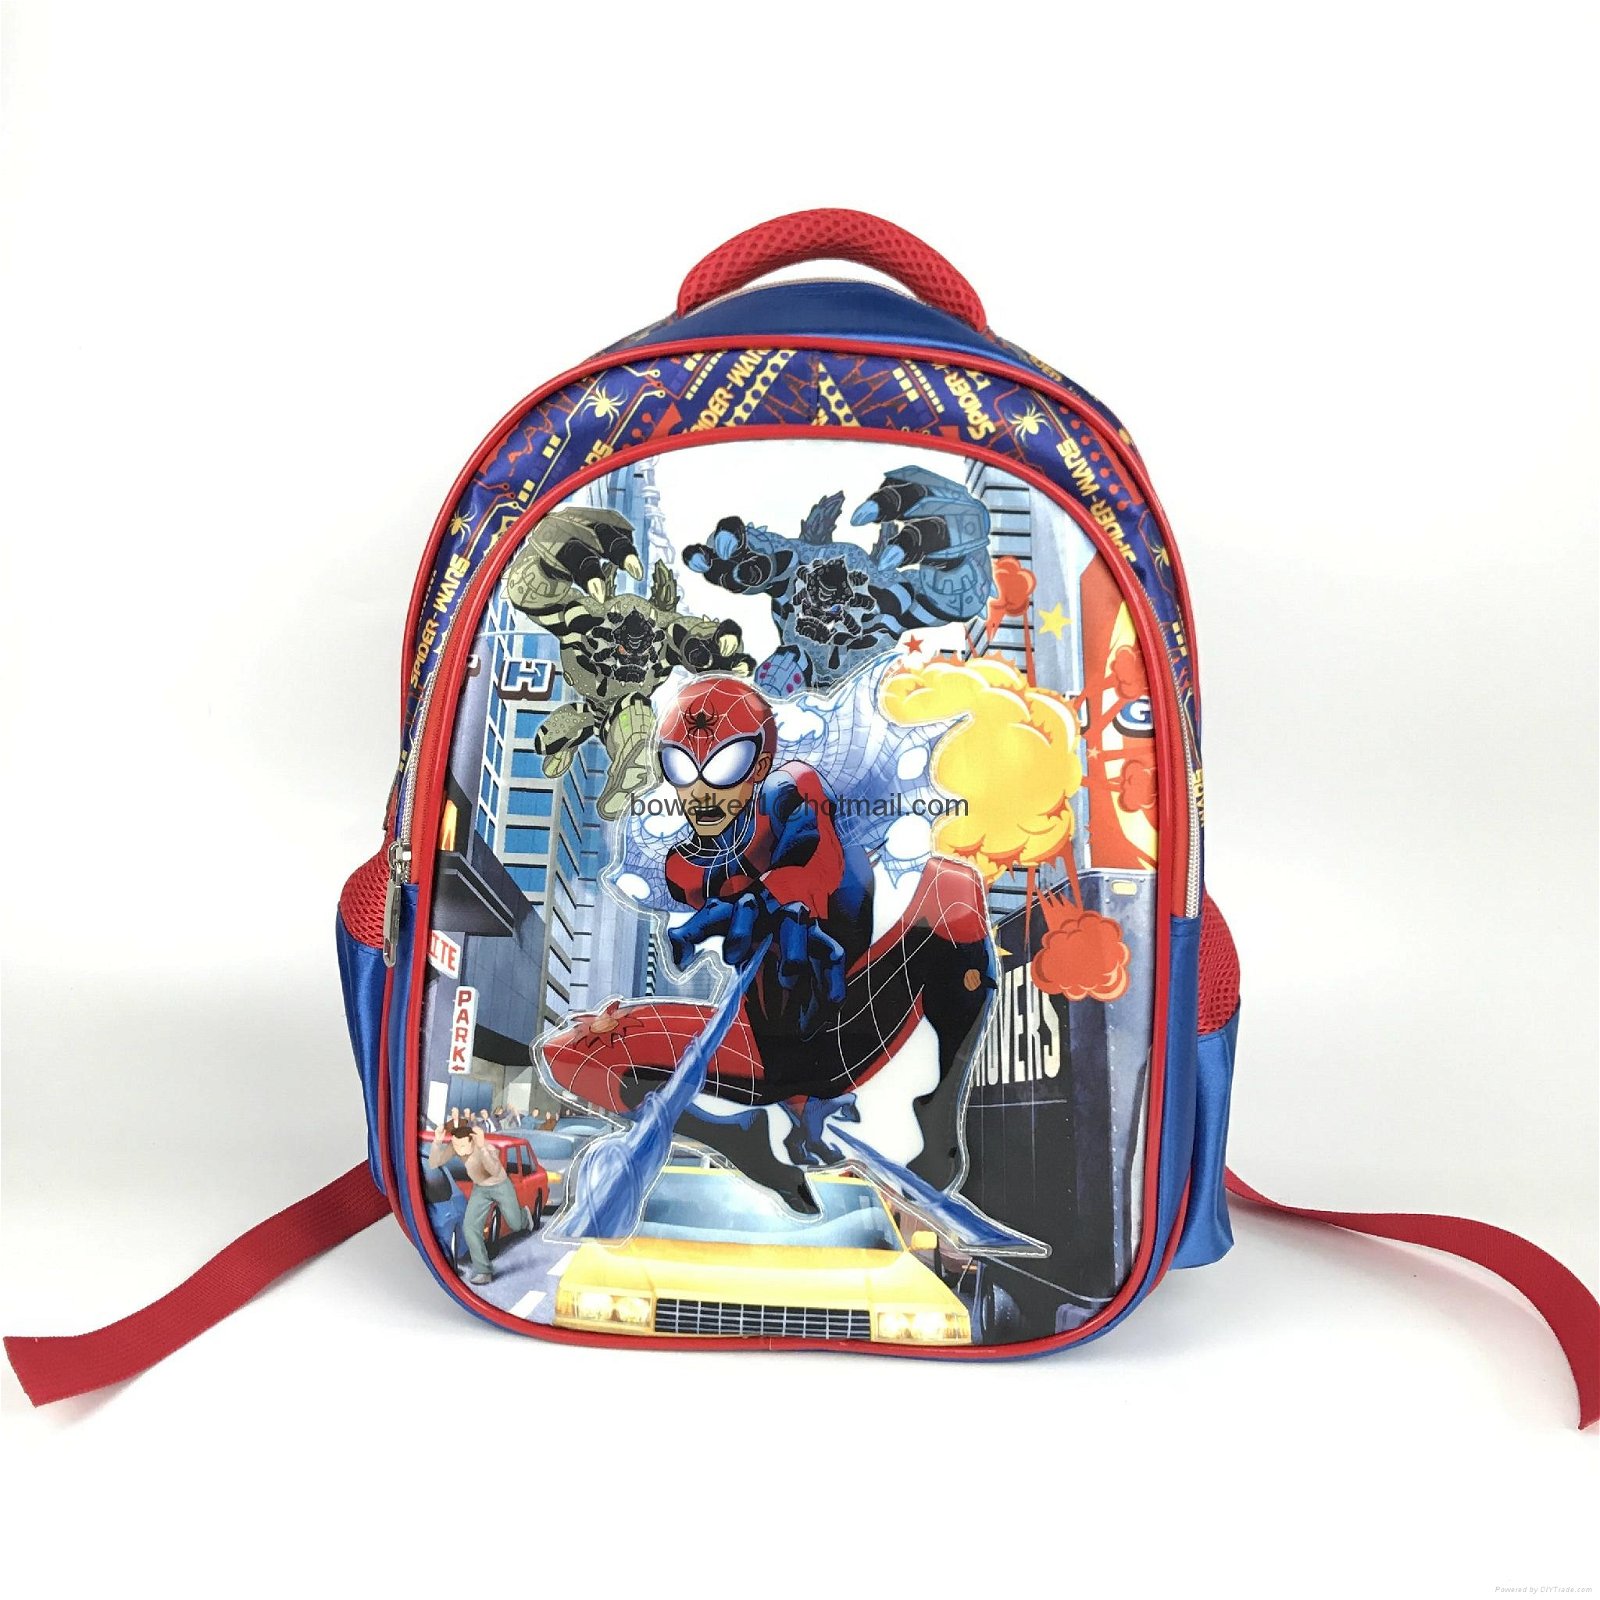 15 inch school bag school backpack children bookbag satin material 4